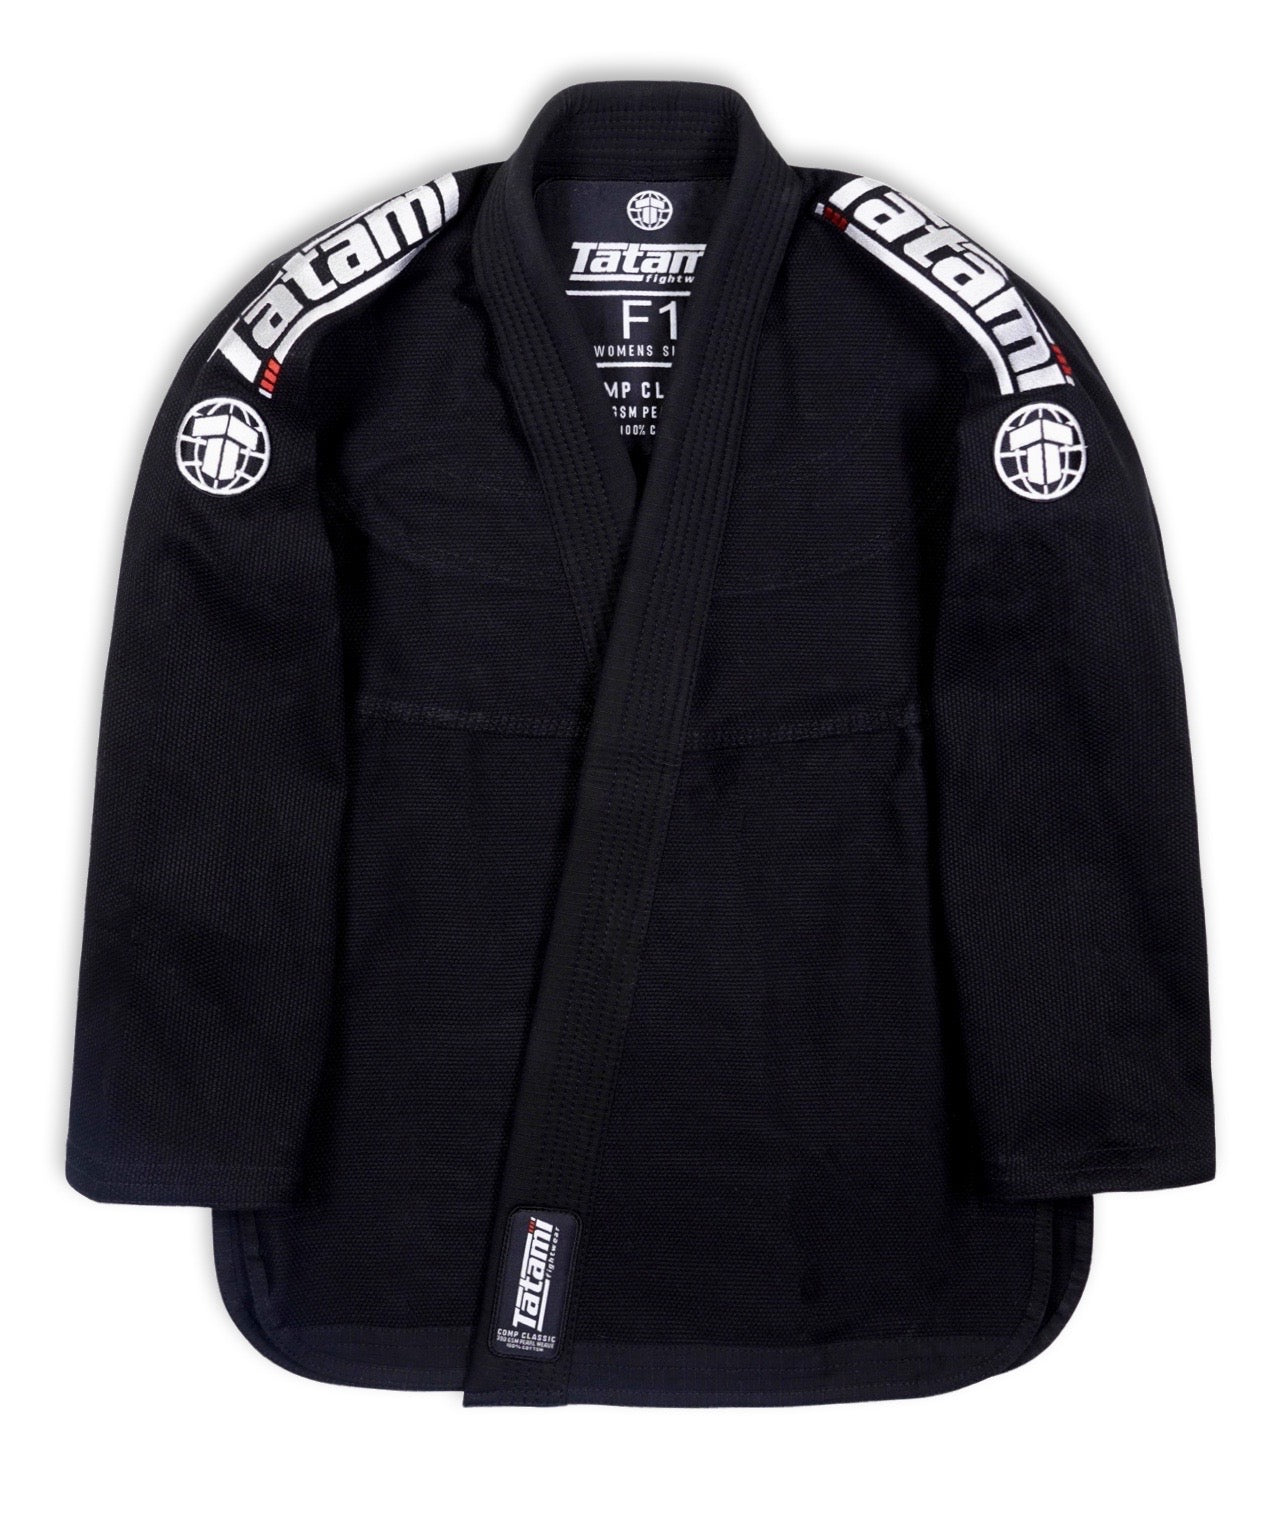 Tatami Fightwear - BJJ Gi & No Gi Clothing, Accessories 